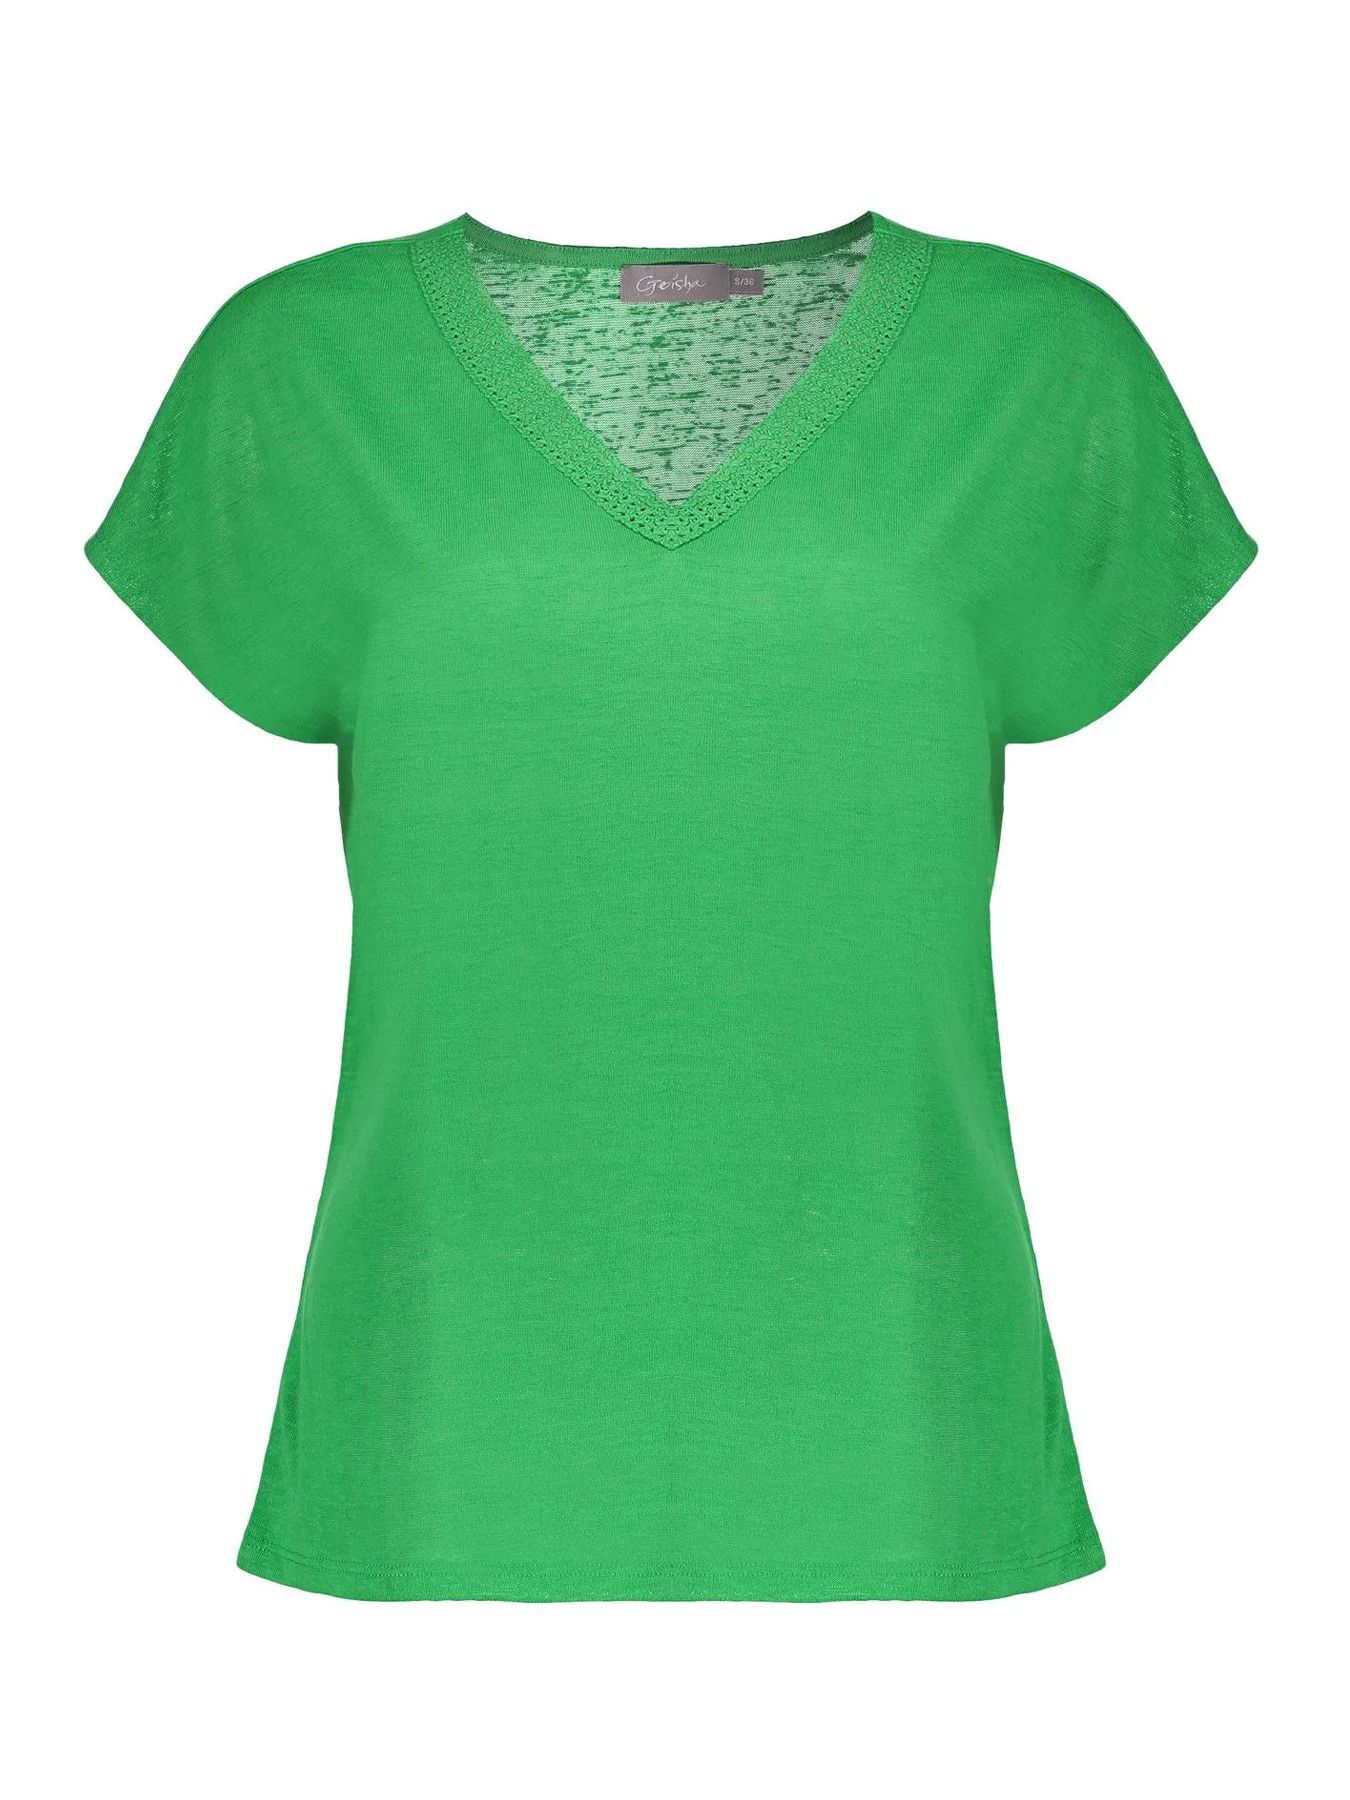 geisha T-shirt fake linen with tape 530 green 2900147614079